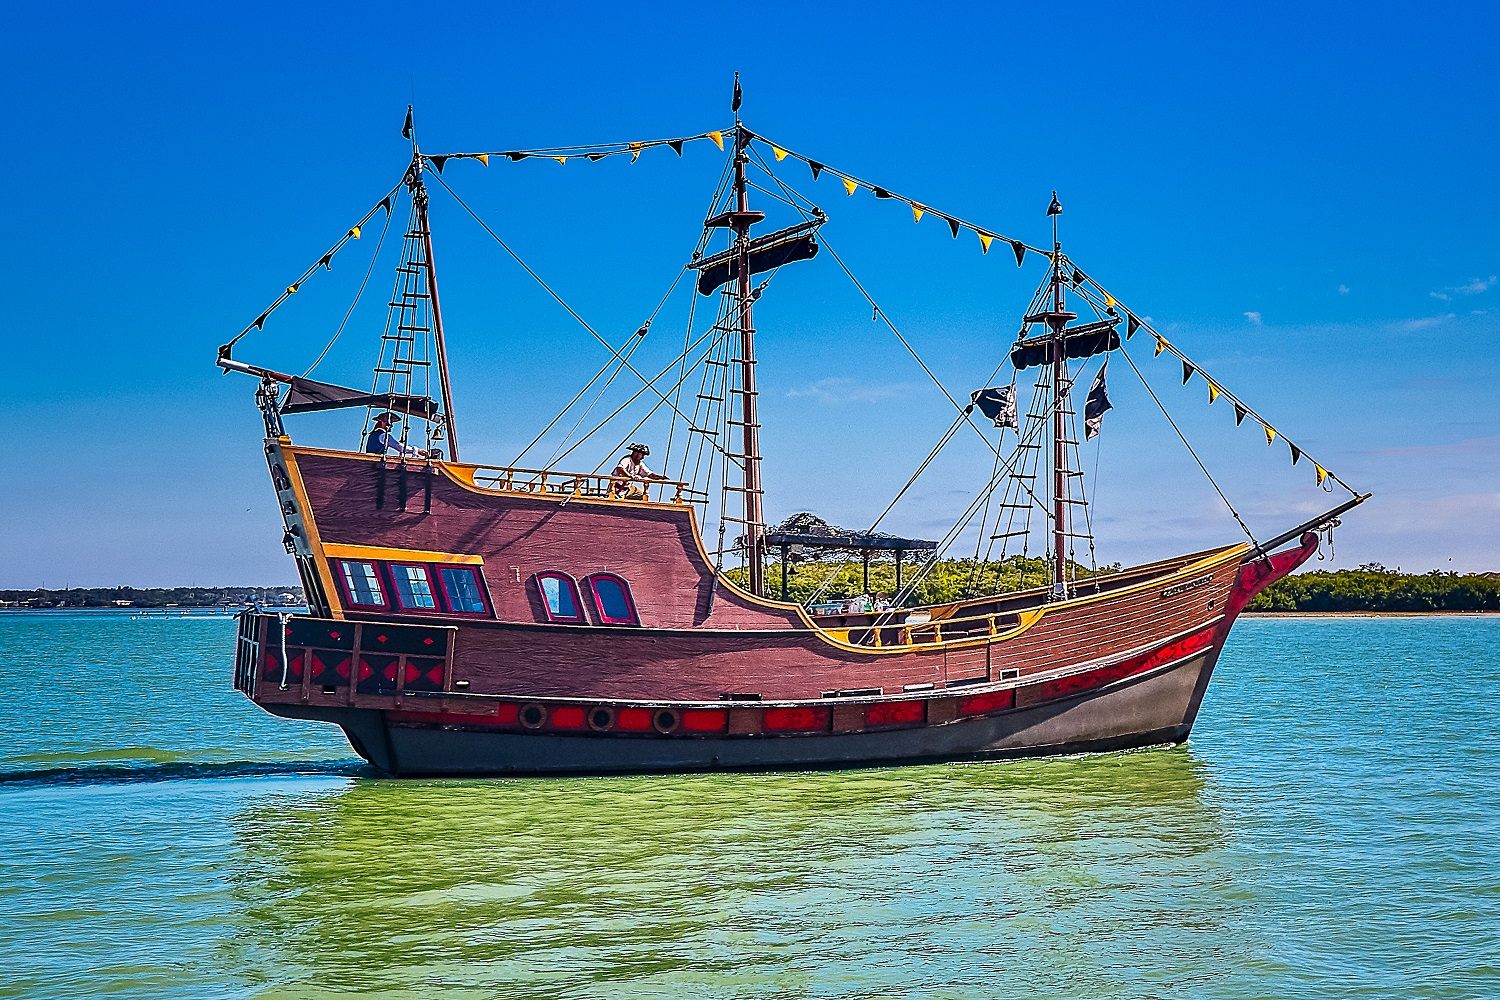 Set sail to explore Boca Ciega Bay with a friendly crew aboard the pirate ship at John’s Pass.